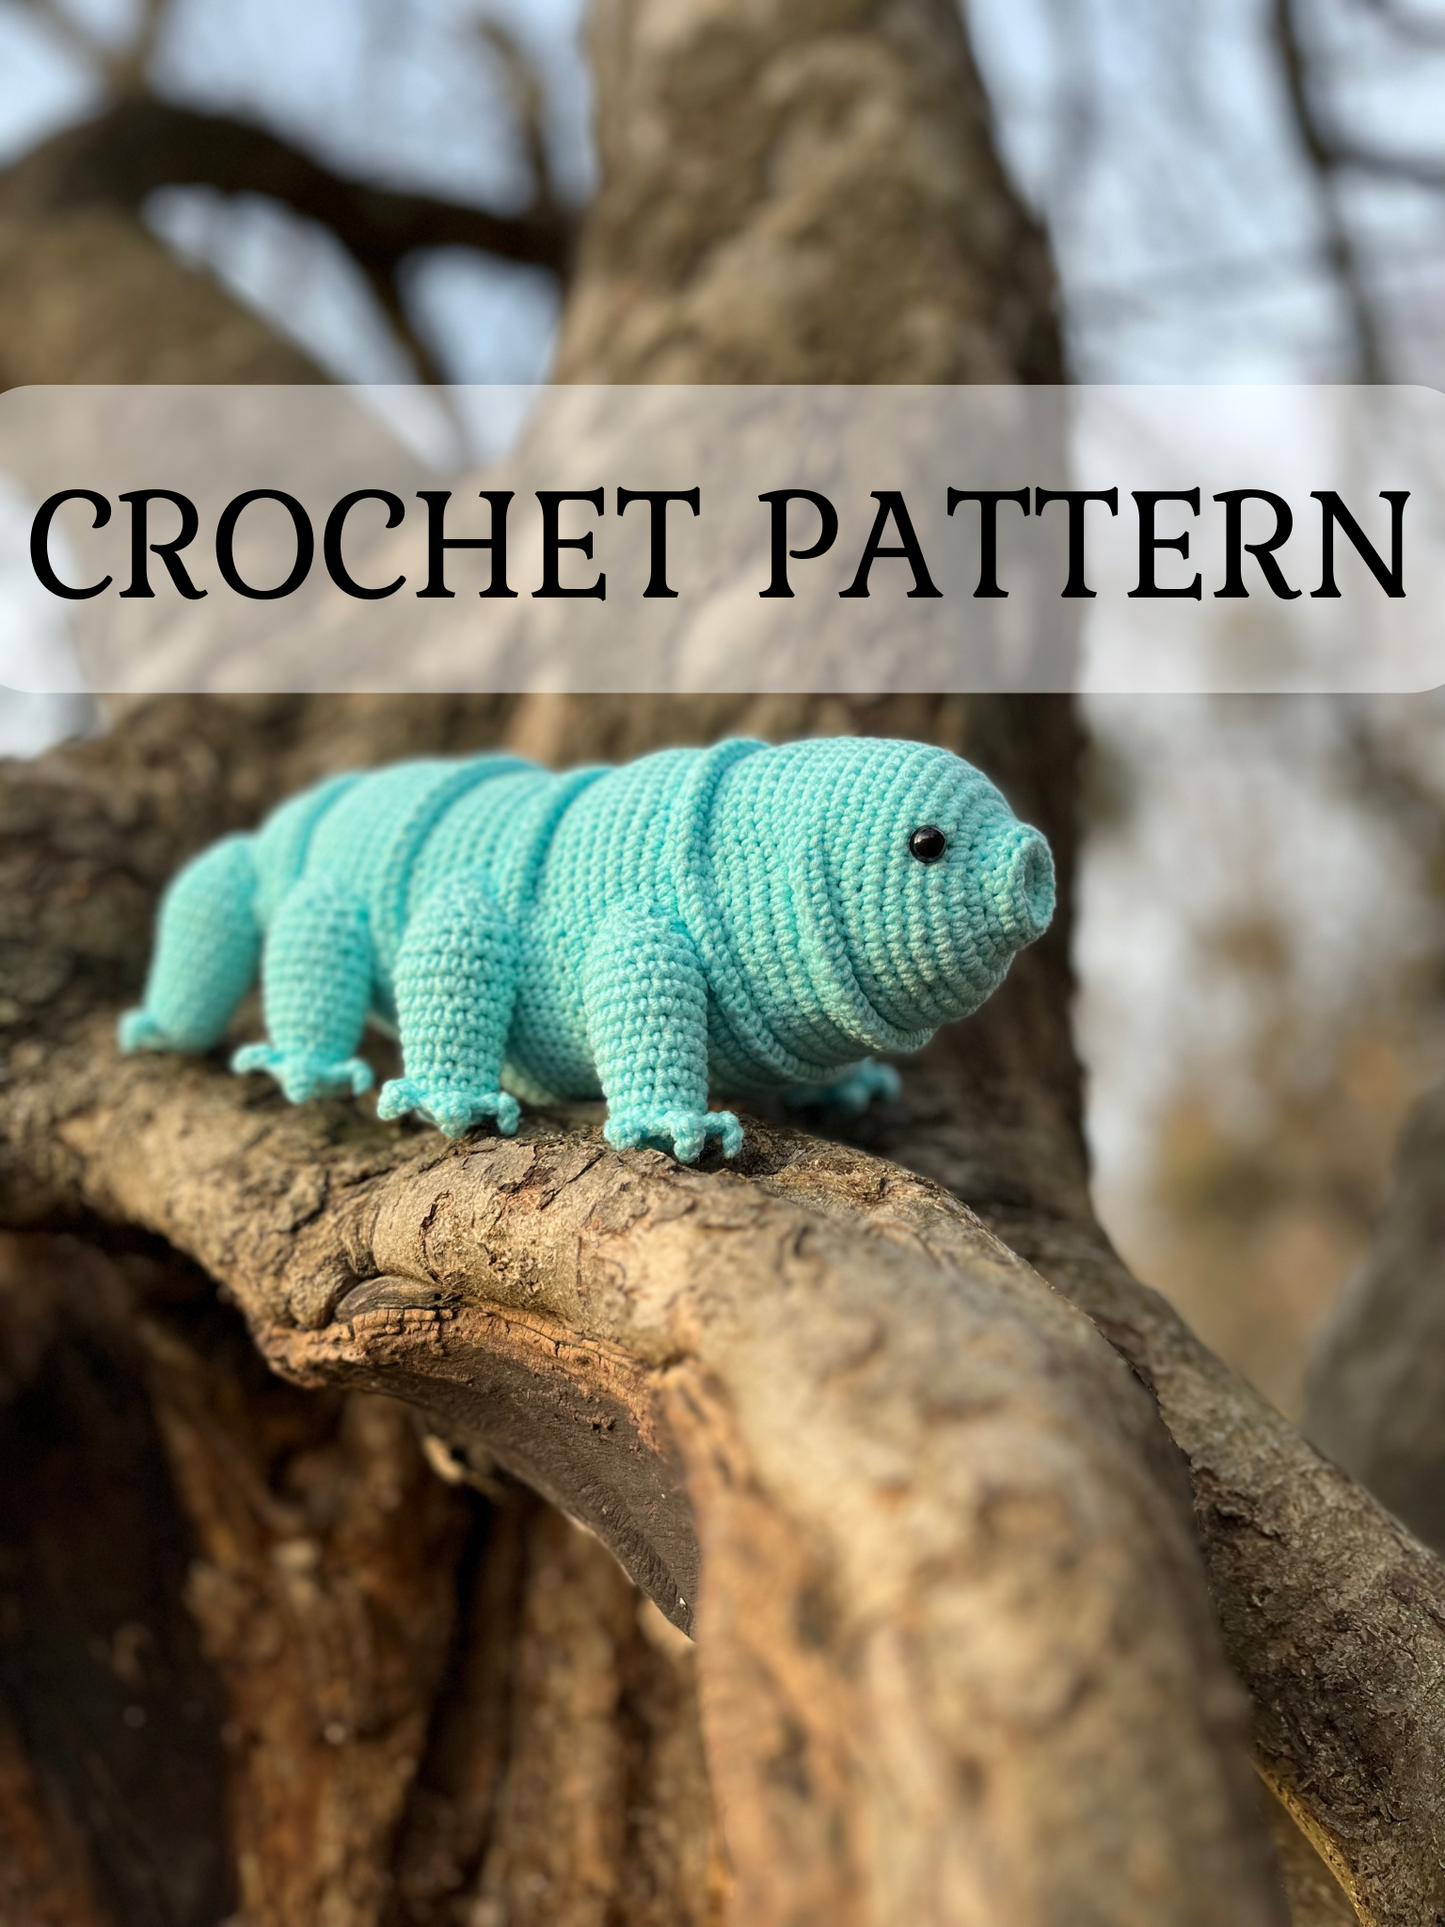 Tardigrade or Water Bear Amigurumi Crochet Pattern, PDF file in English language